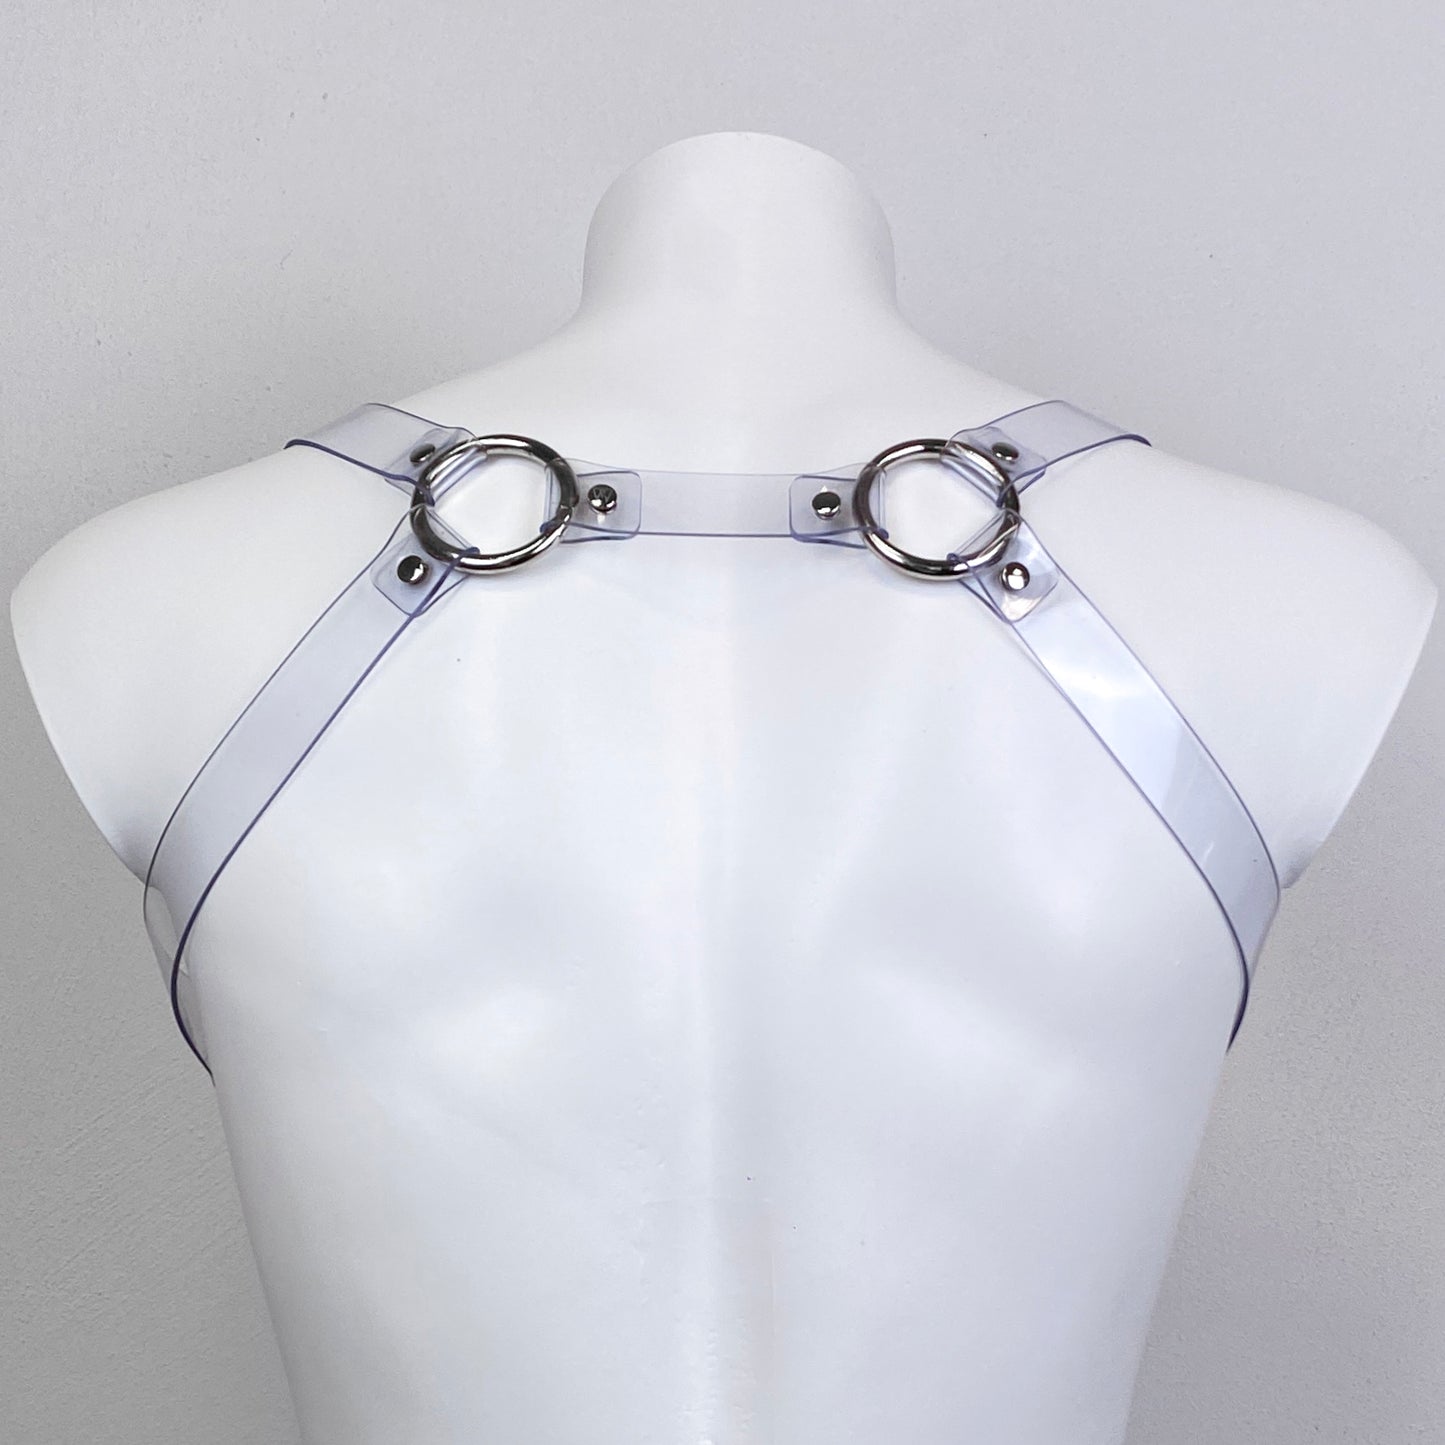 Vers shoulder harness - chest strap